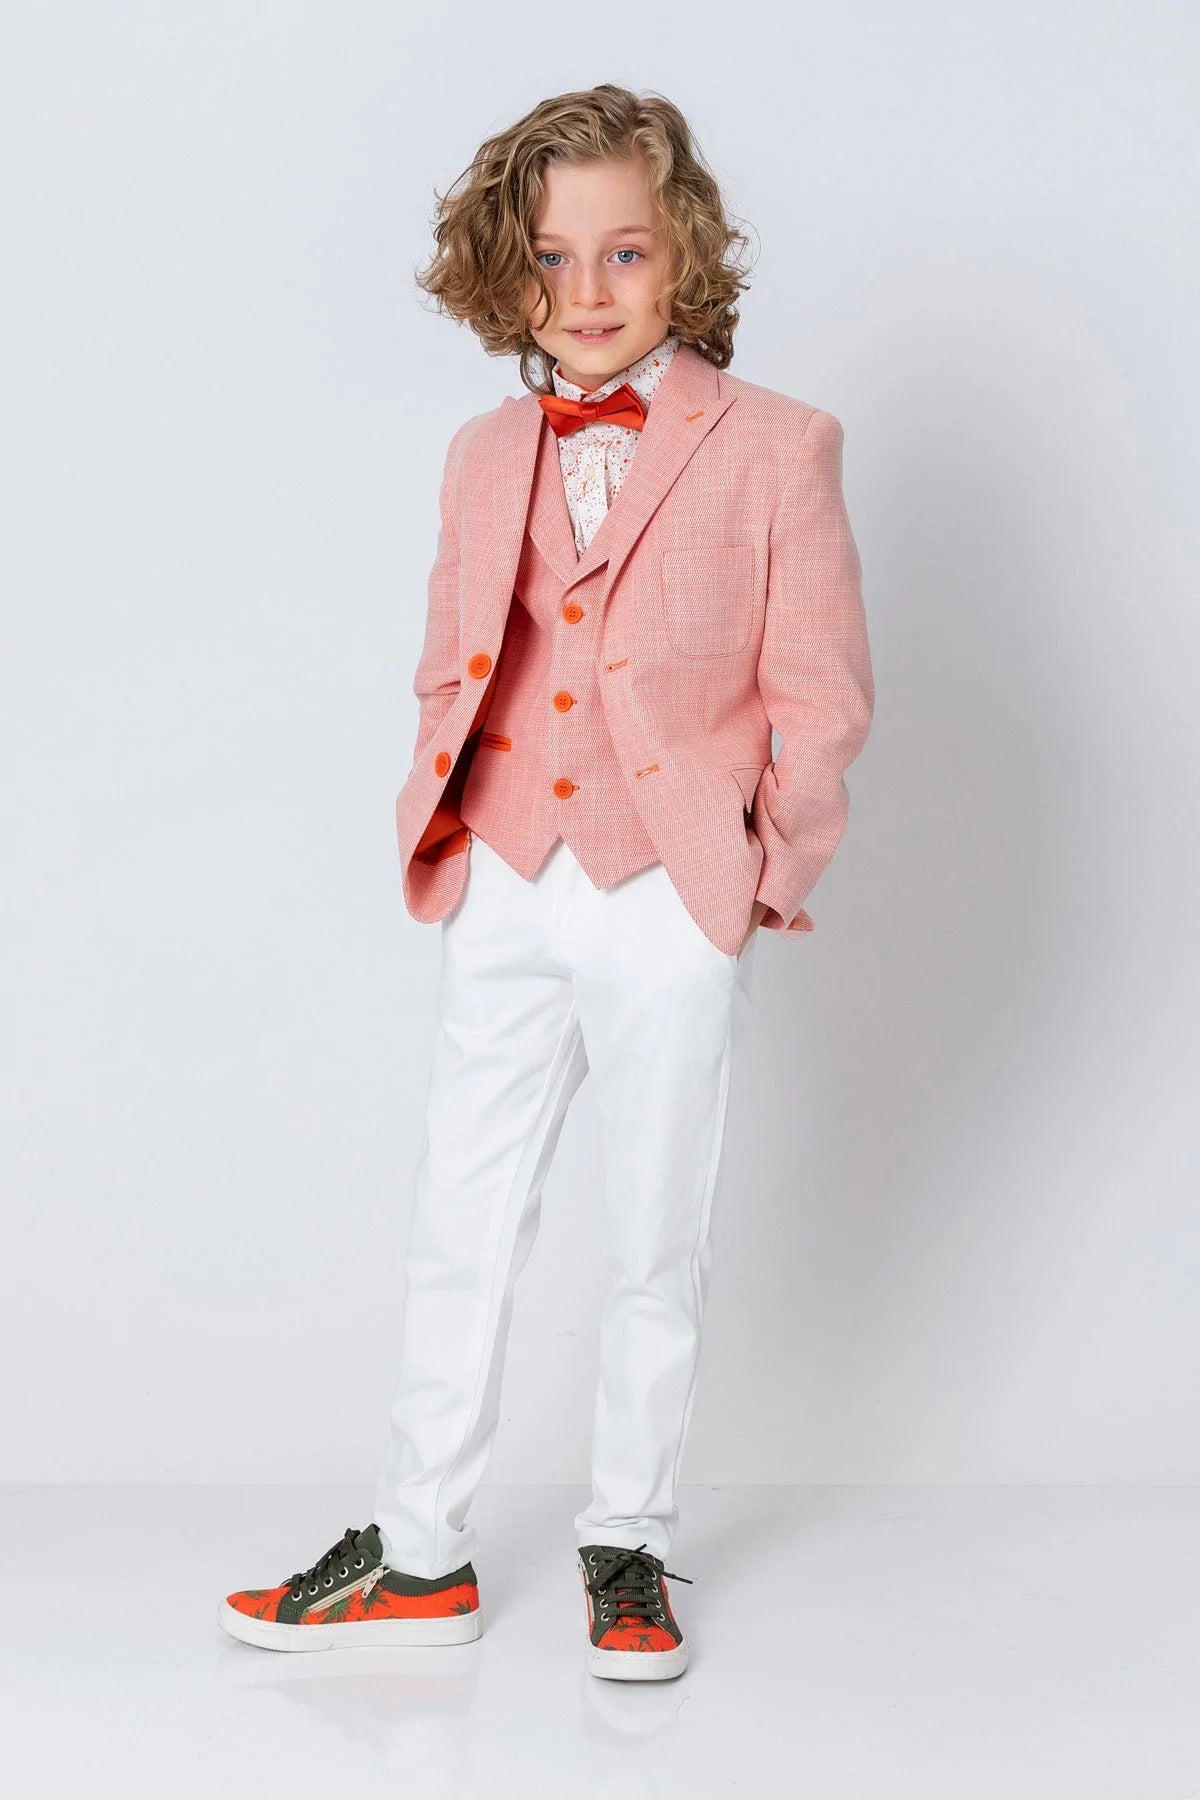 Kids Boys Gentleman Suit Outfit Long Sleeve Shirt + Bib Pants Set Casual  Clothes | Fruugo QA